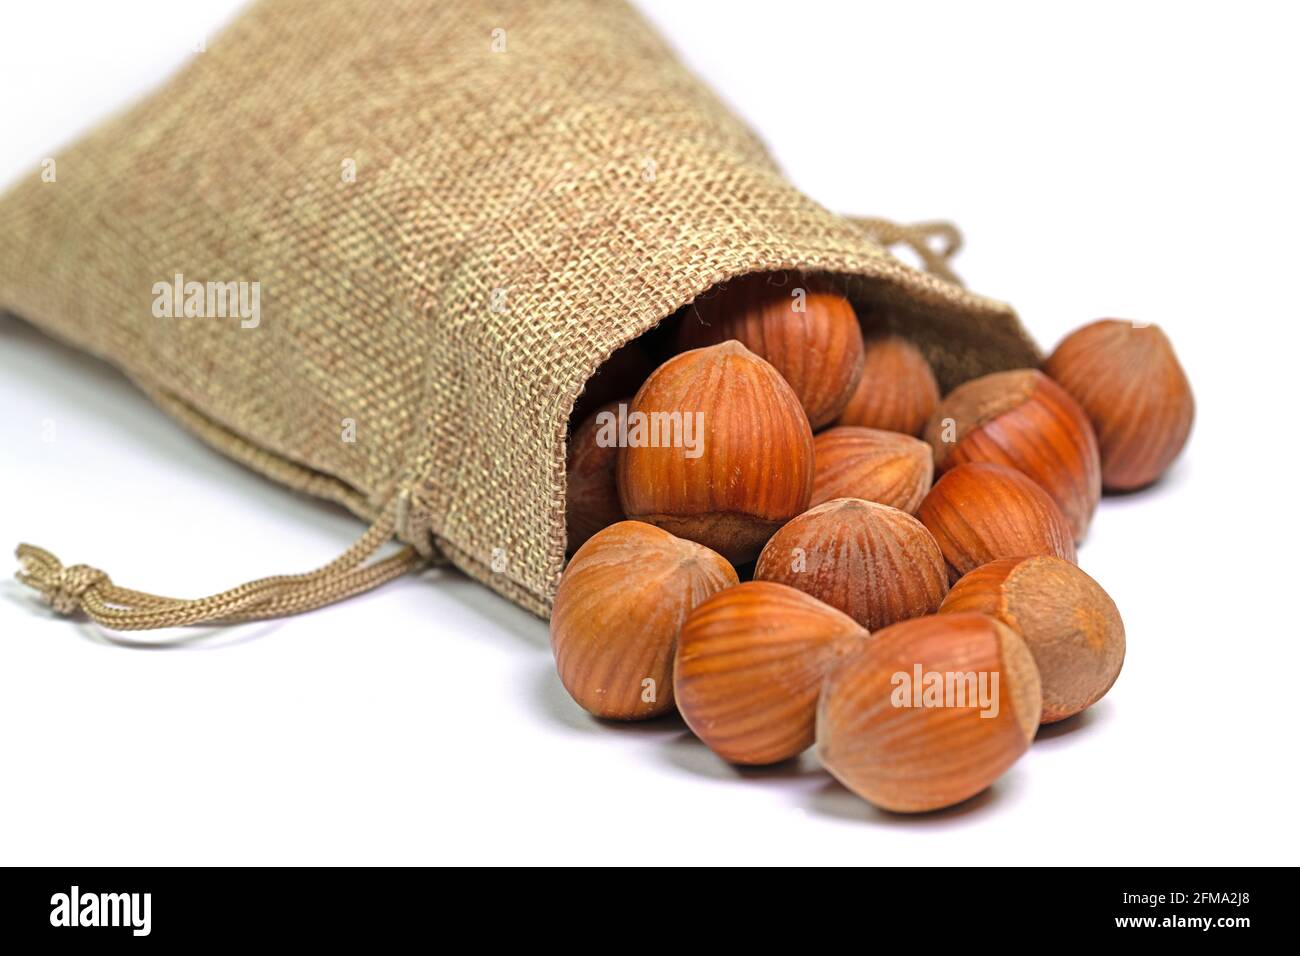 https://c8.alamy.com/comp/2FMA2J8/hazelnuts-in-a-jute-bag-against-a-white-background-2FMA2J8.jpg